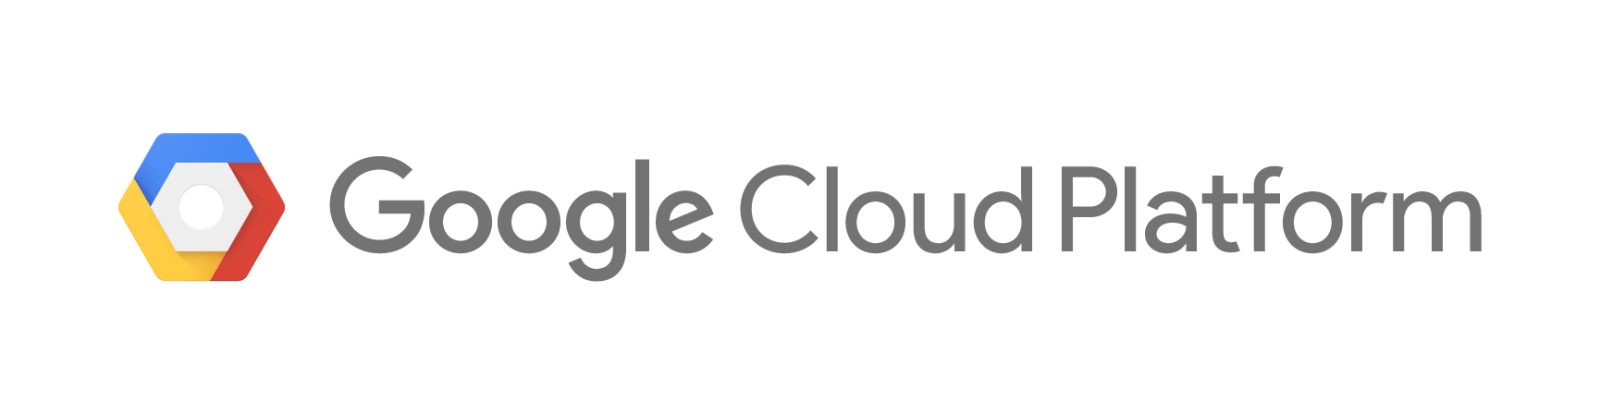 Google Cloud Platform Logo - googlecloudplatform-logo (1) - Google Cloud Premier Partner | G ...